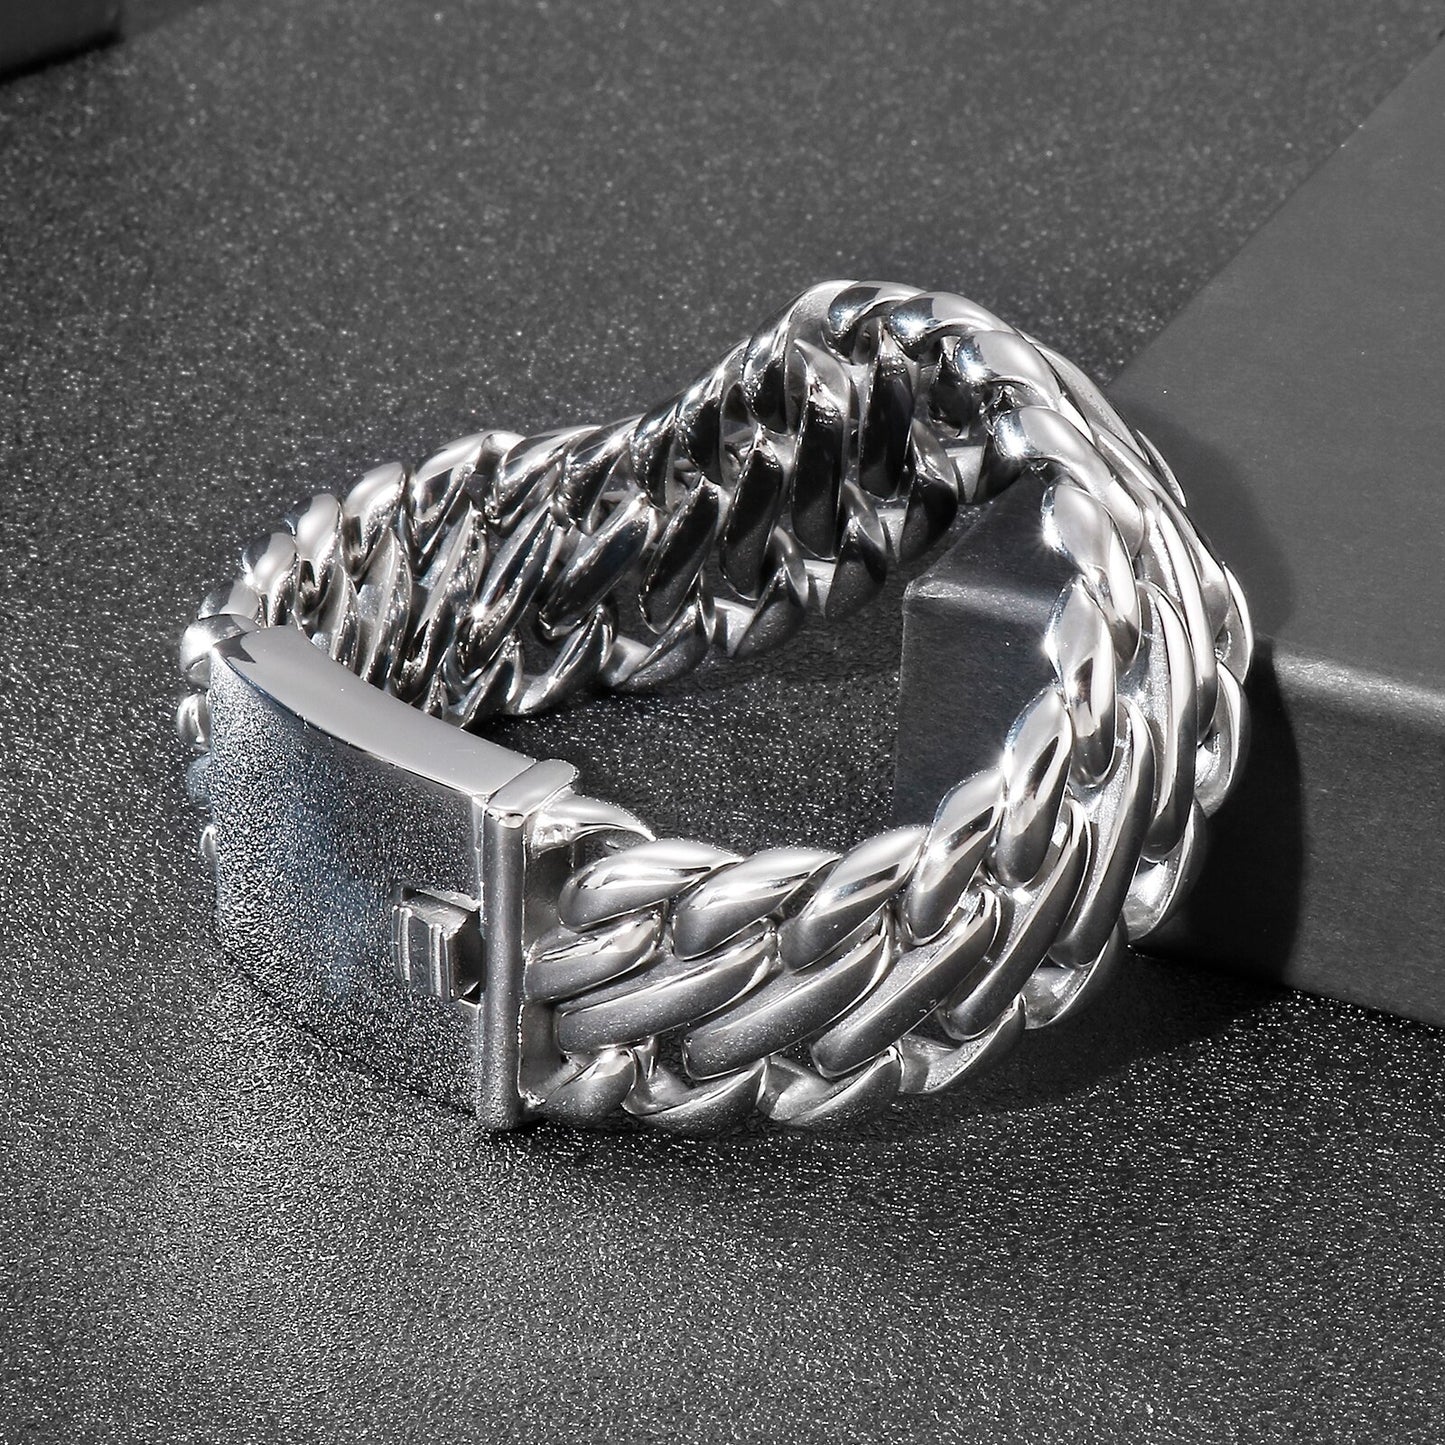 Trendy Wide Big Shiny Men Bracelet High Quality Polished Stainless Steel Wristband Male Bracelets Bangle Jewelry